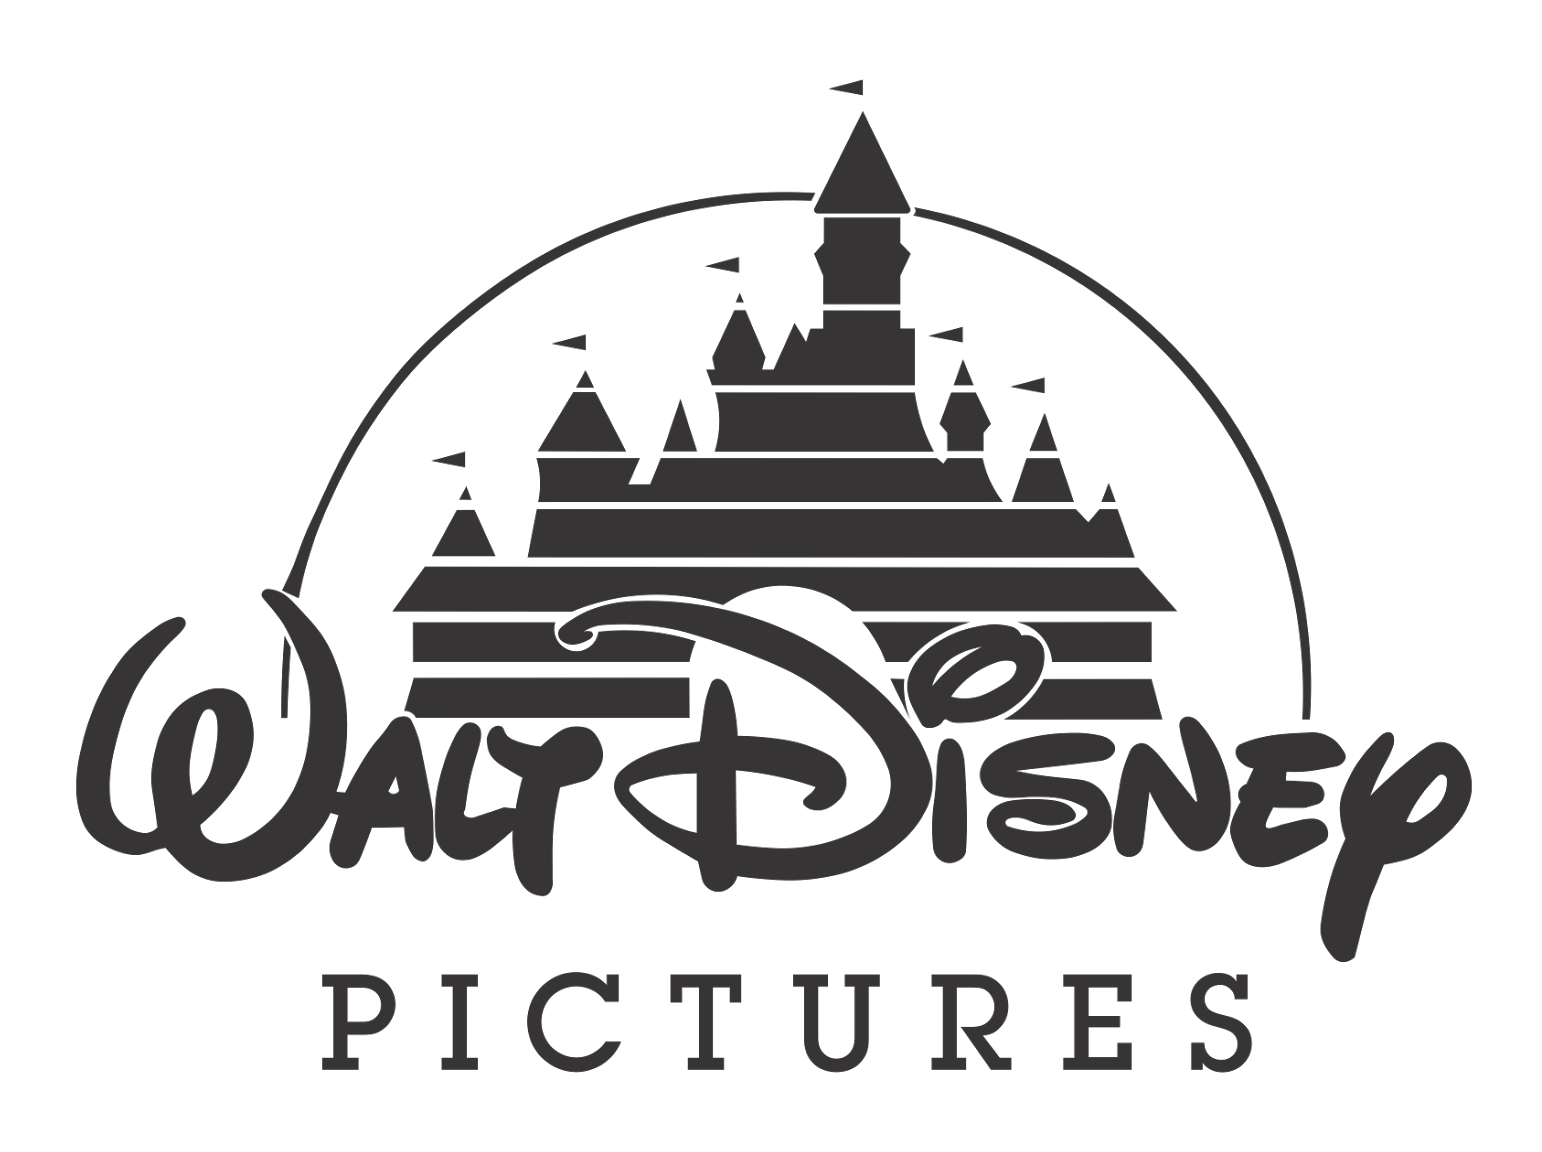 walt disney pictures logo png transparent #6154